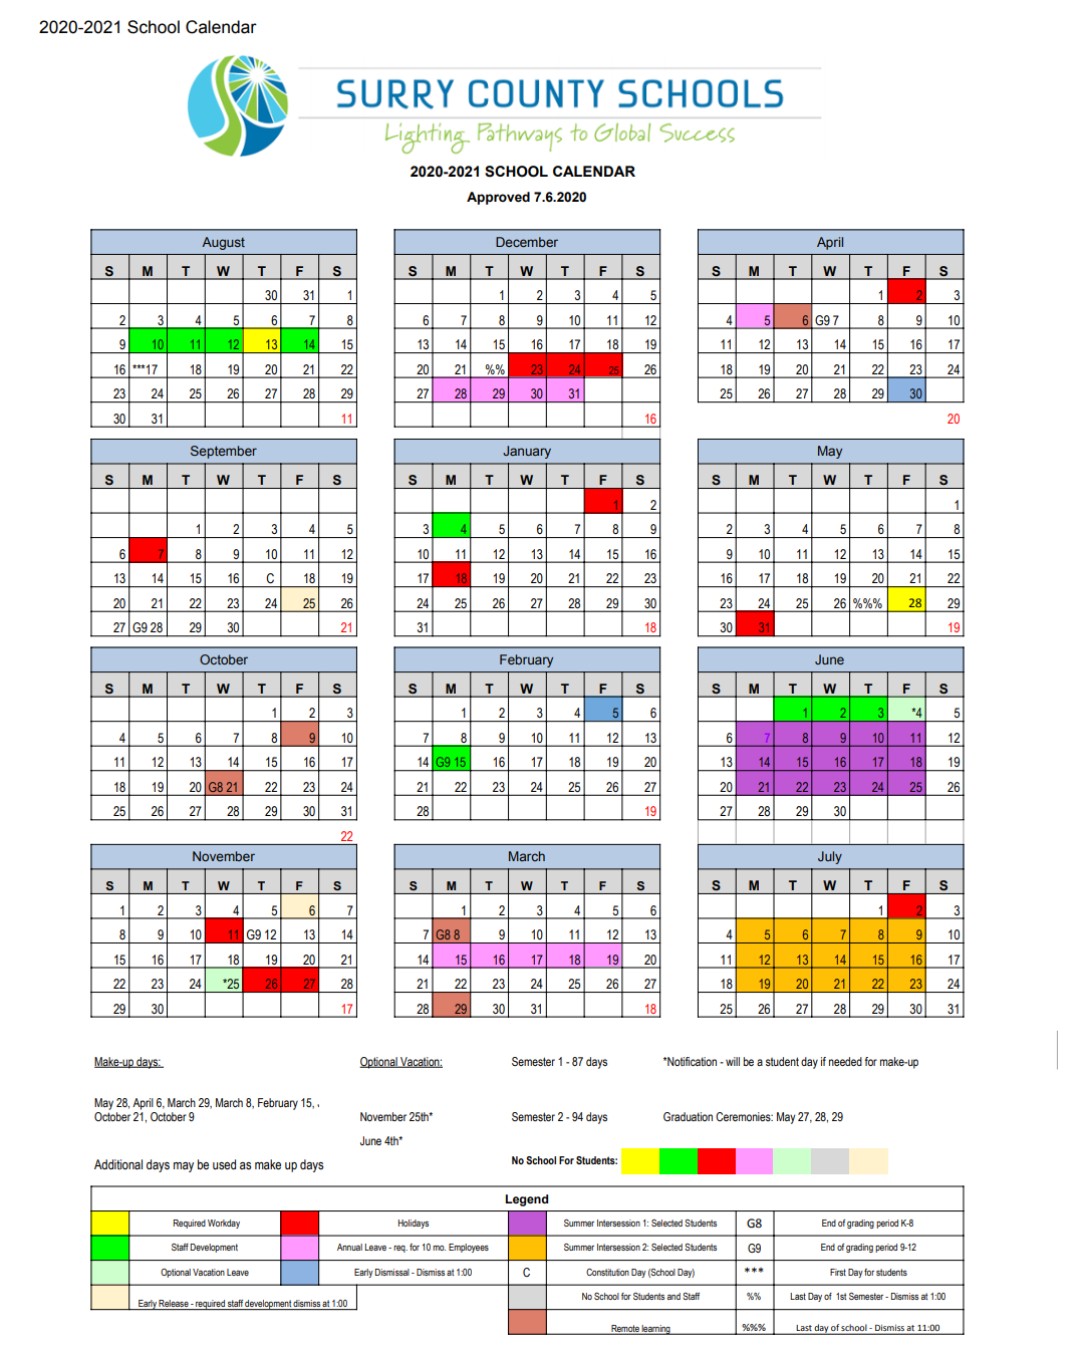 Surry Community College Calendar 2022 Surry County Schools On Twitter: "Please See The 2020-2021 School Calendar.  Https://T.co/L1Qucs6Flx" / Twitter